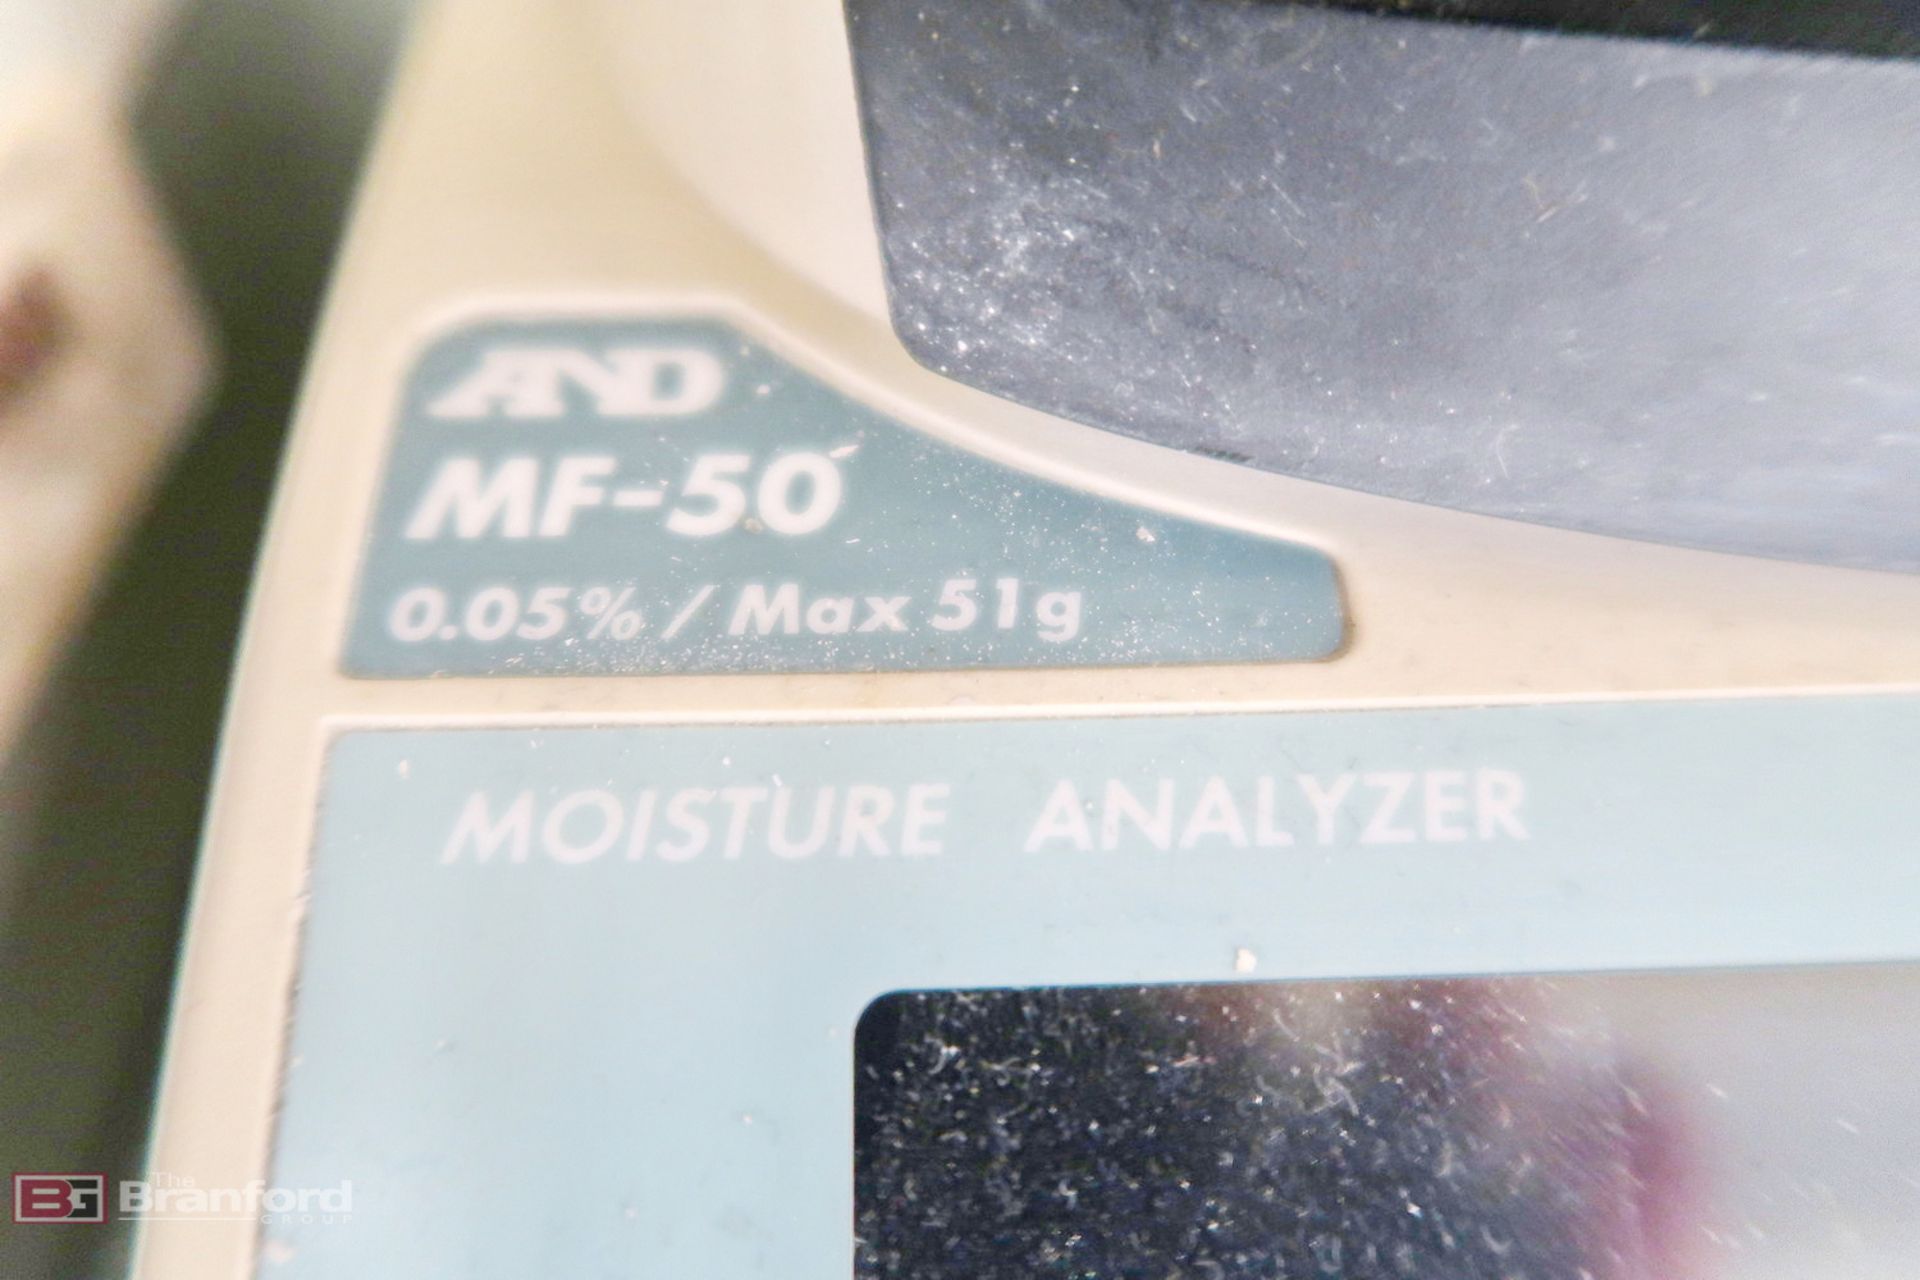 AND MF-50 moisture analyzer - Image 2 of 2